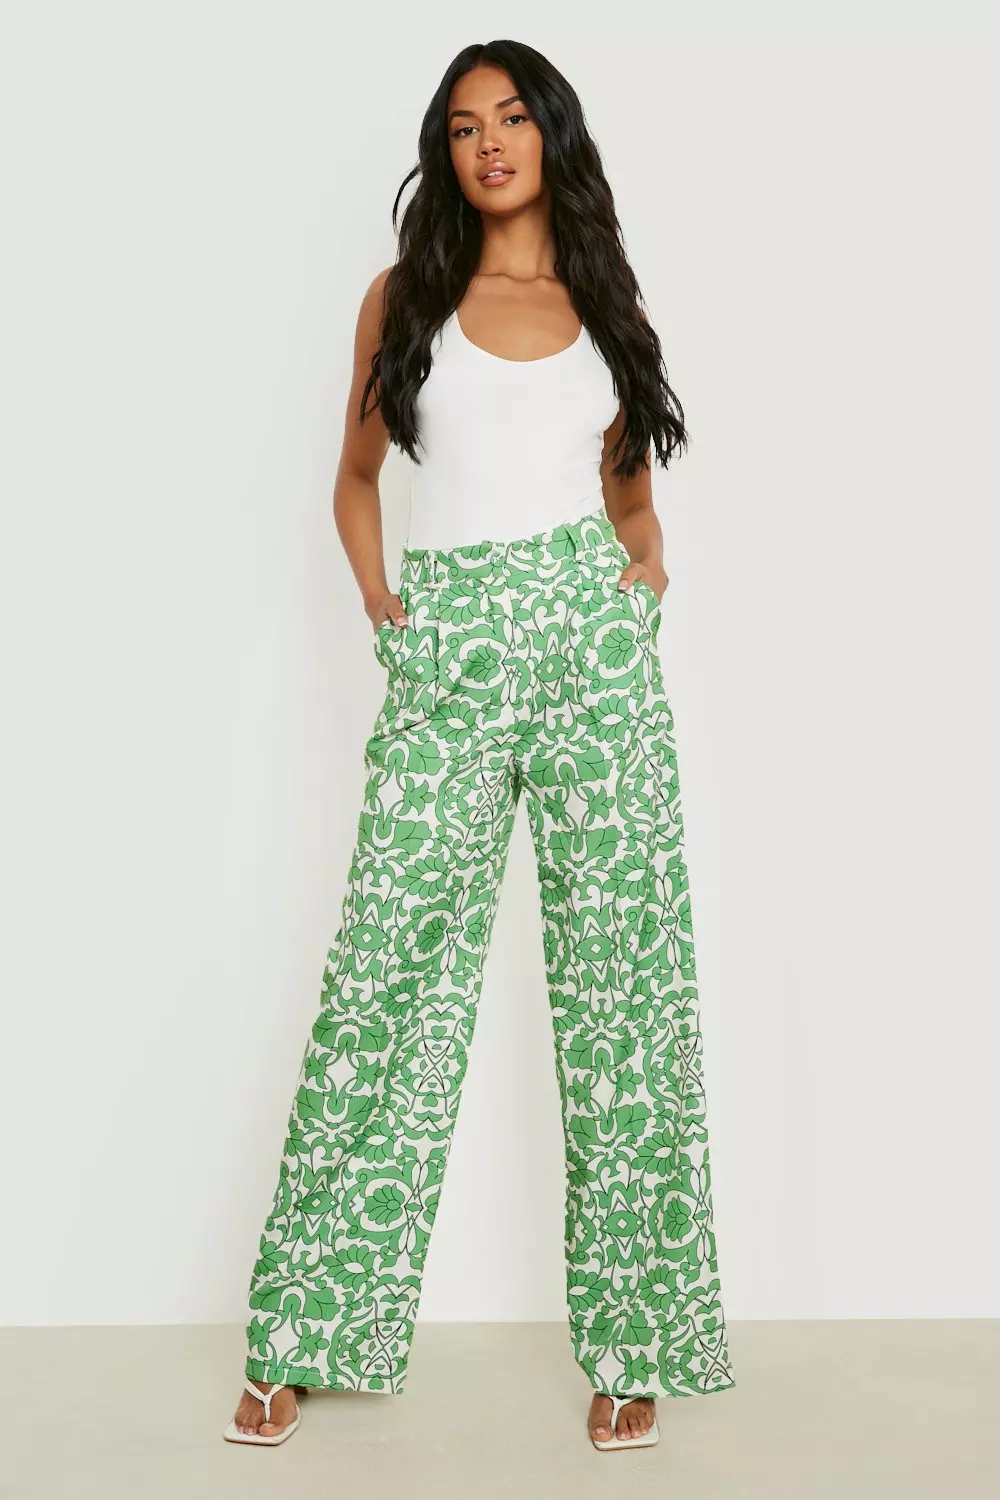 Bright Green Floral Pants - Floral Print Pants - Wide-Leg Pants